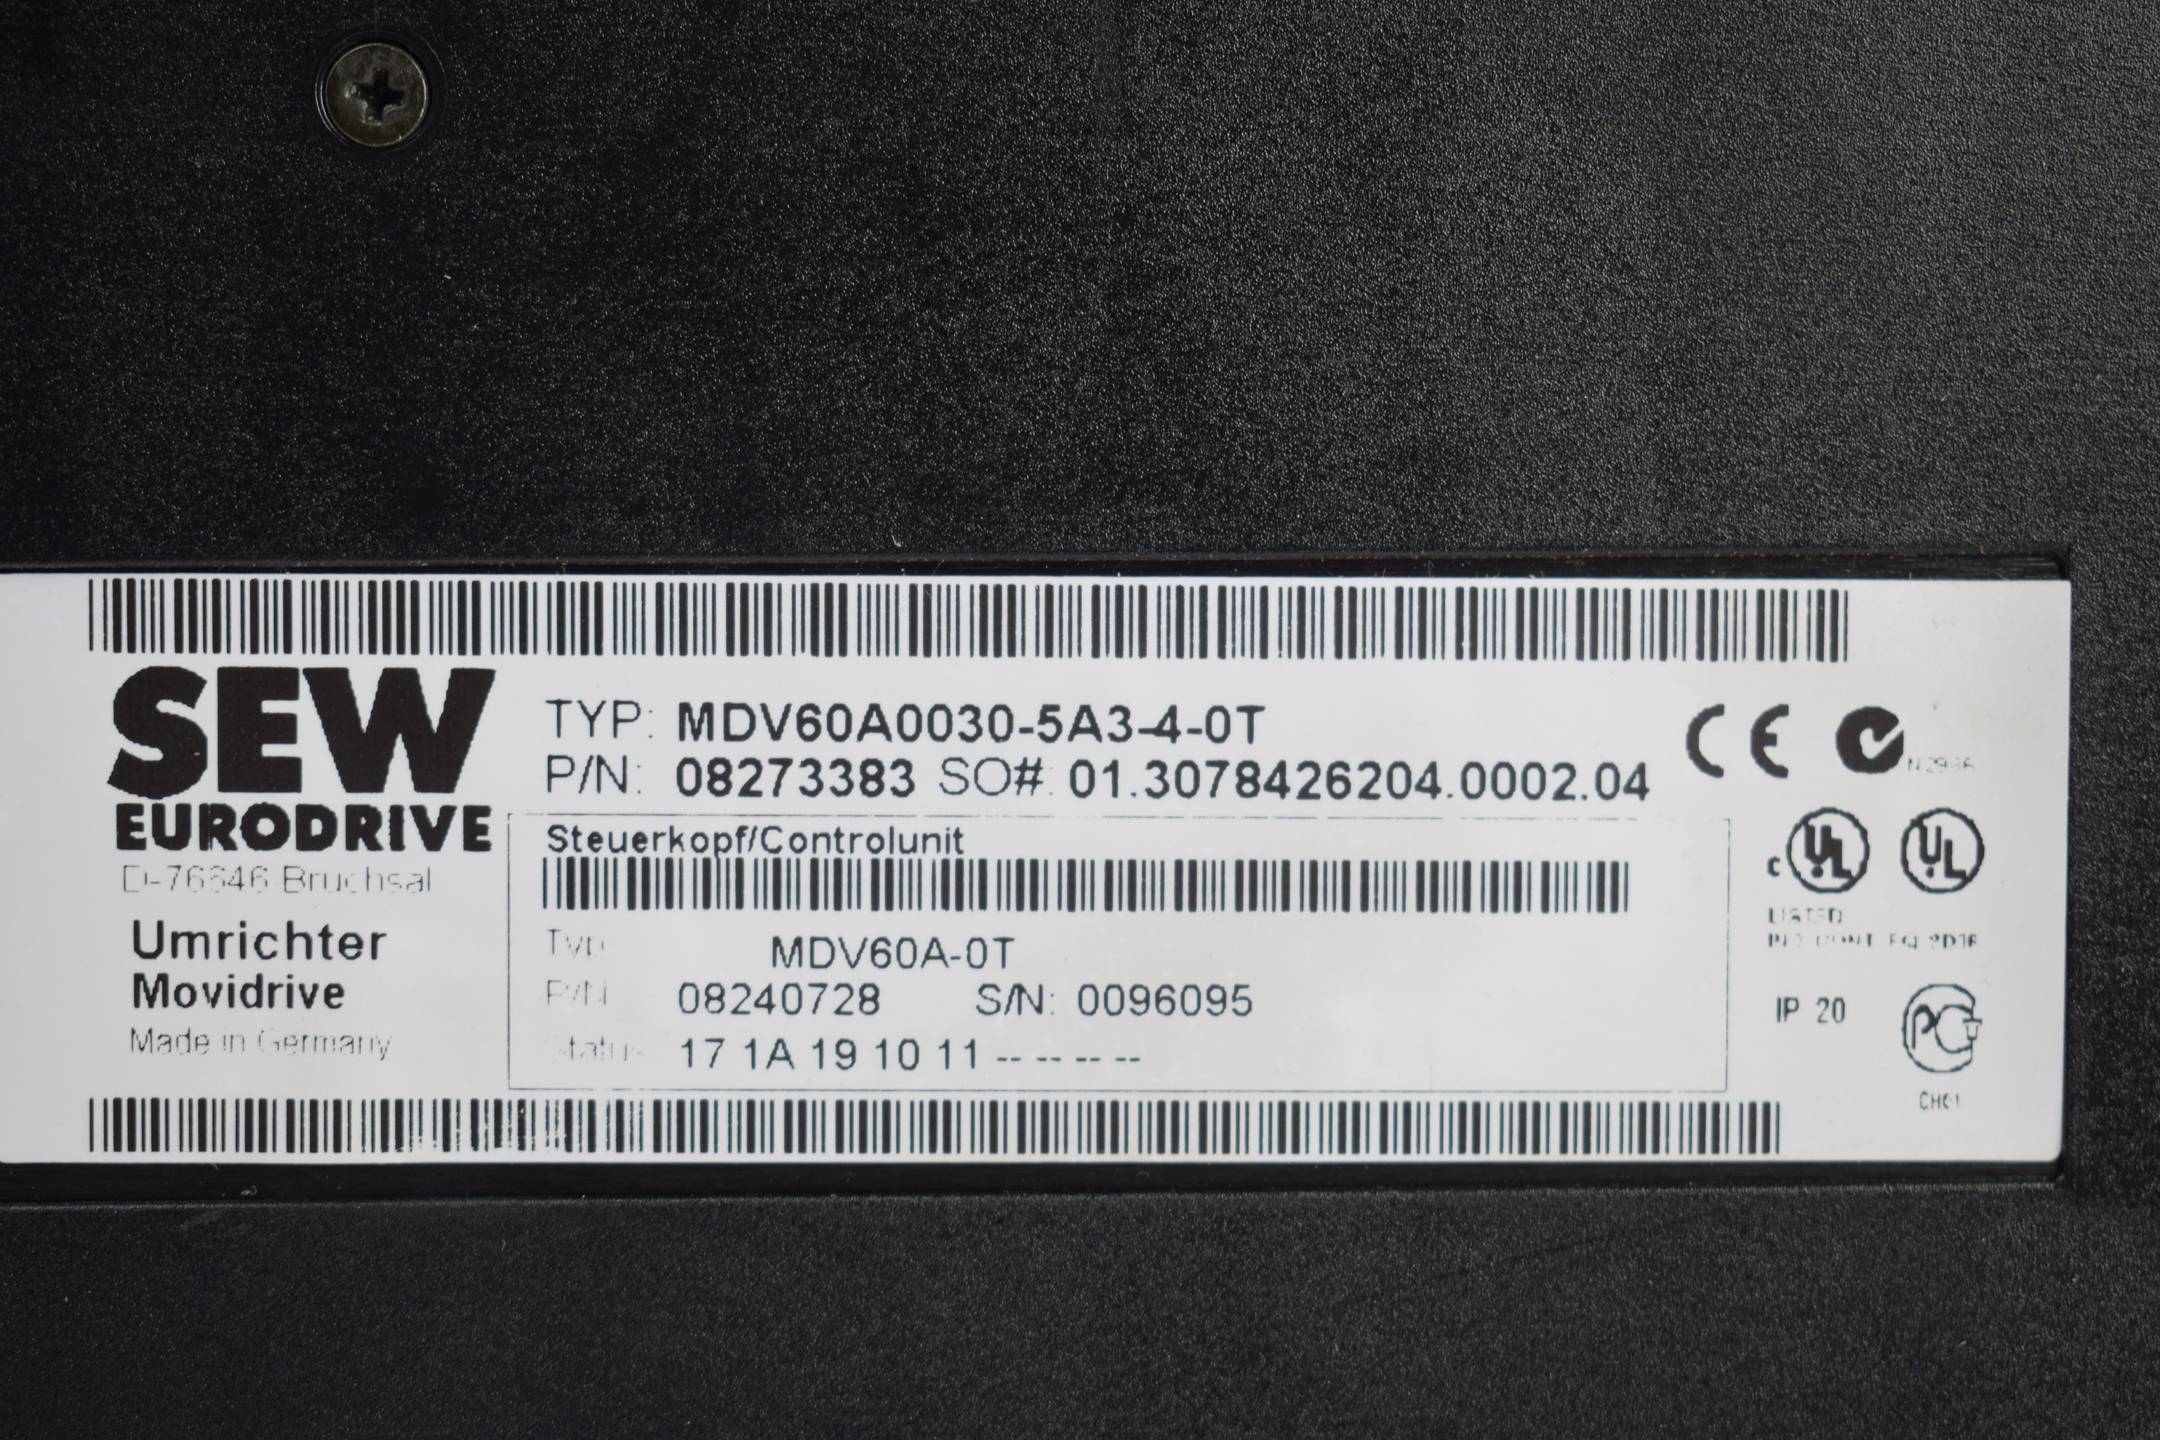 SEW Eurodrive Movidrive Umrichter MDV60A0030-5A3-4-0T